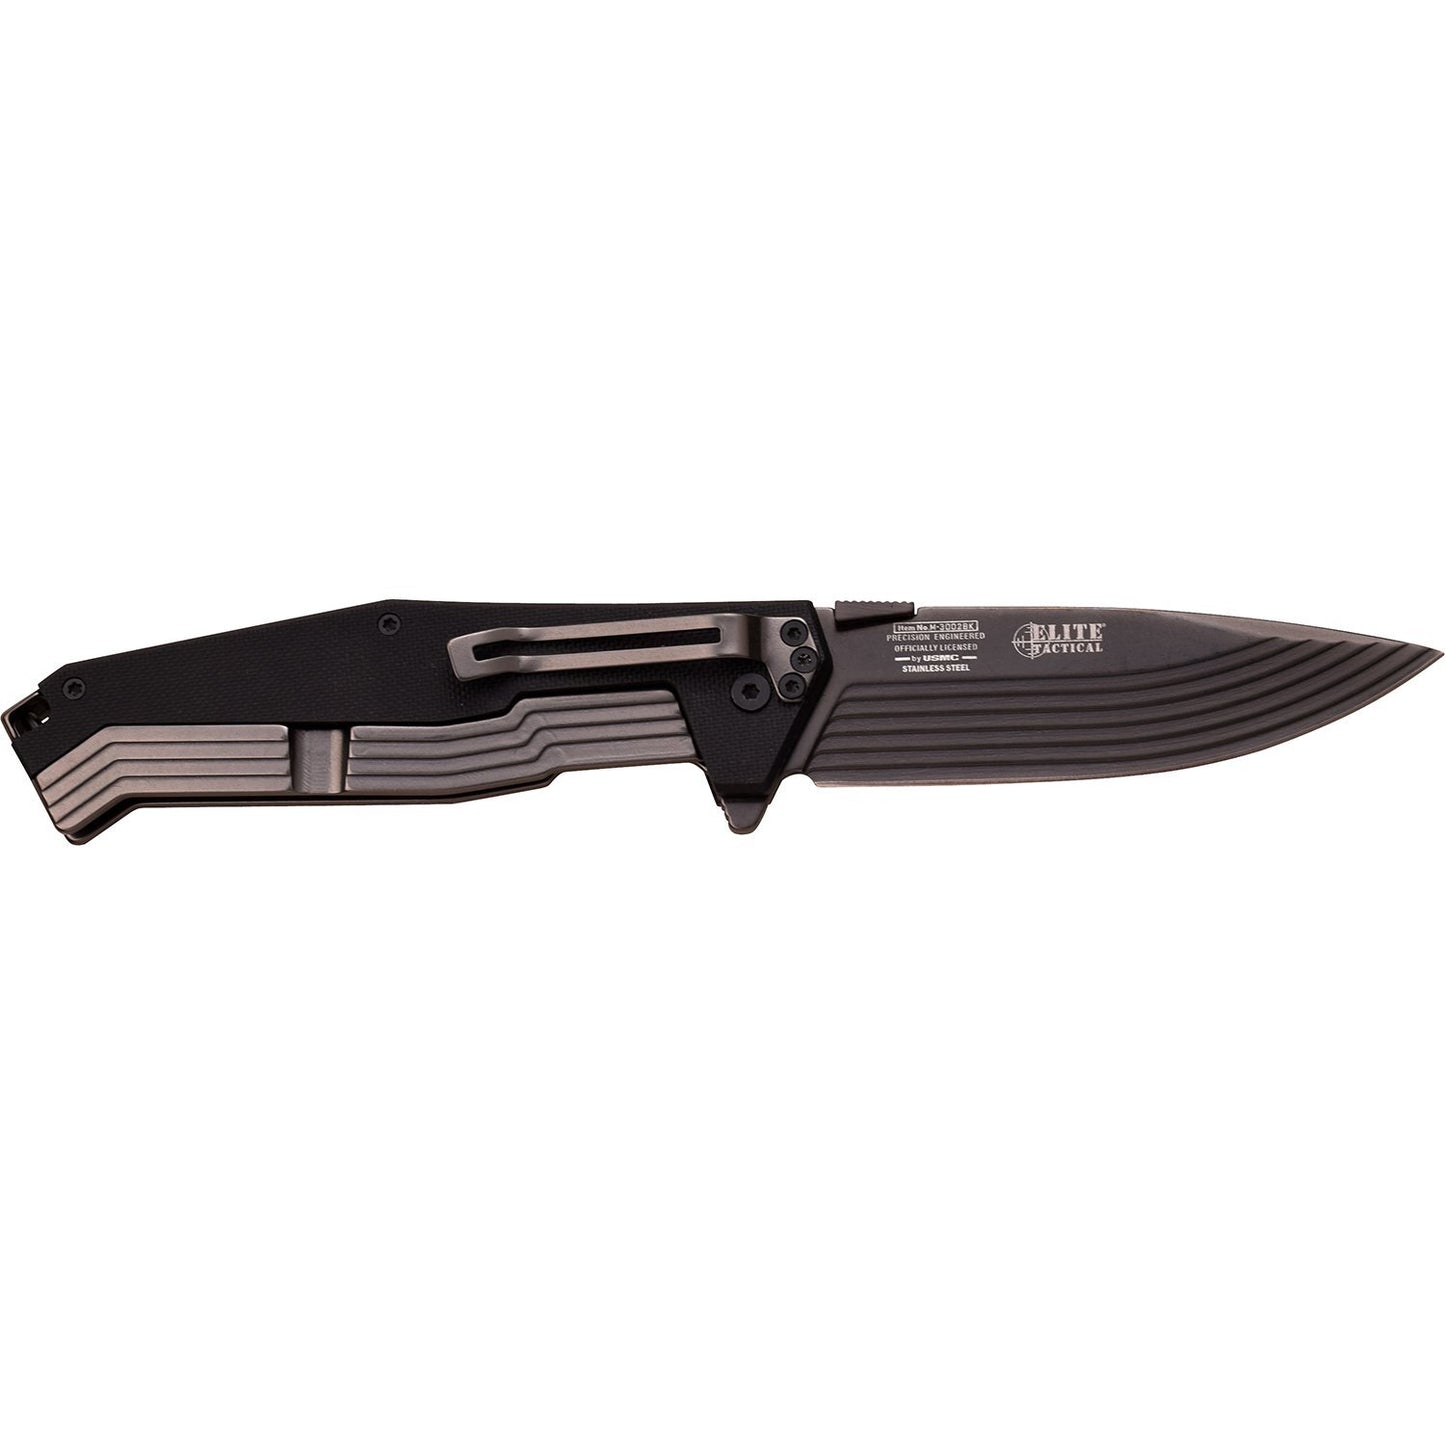 Usmc Usmc Drop Point Fine Edge Blade Folding Knife - 8.25 Inches Ball Bearing Pivot #m-3002Bk Dark Slate Gray